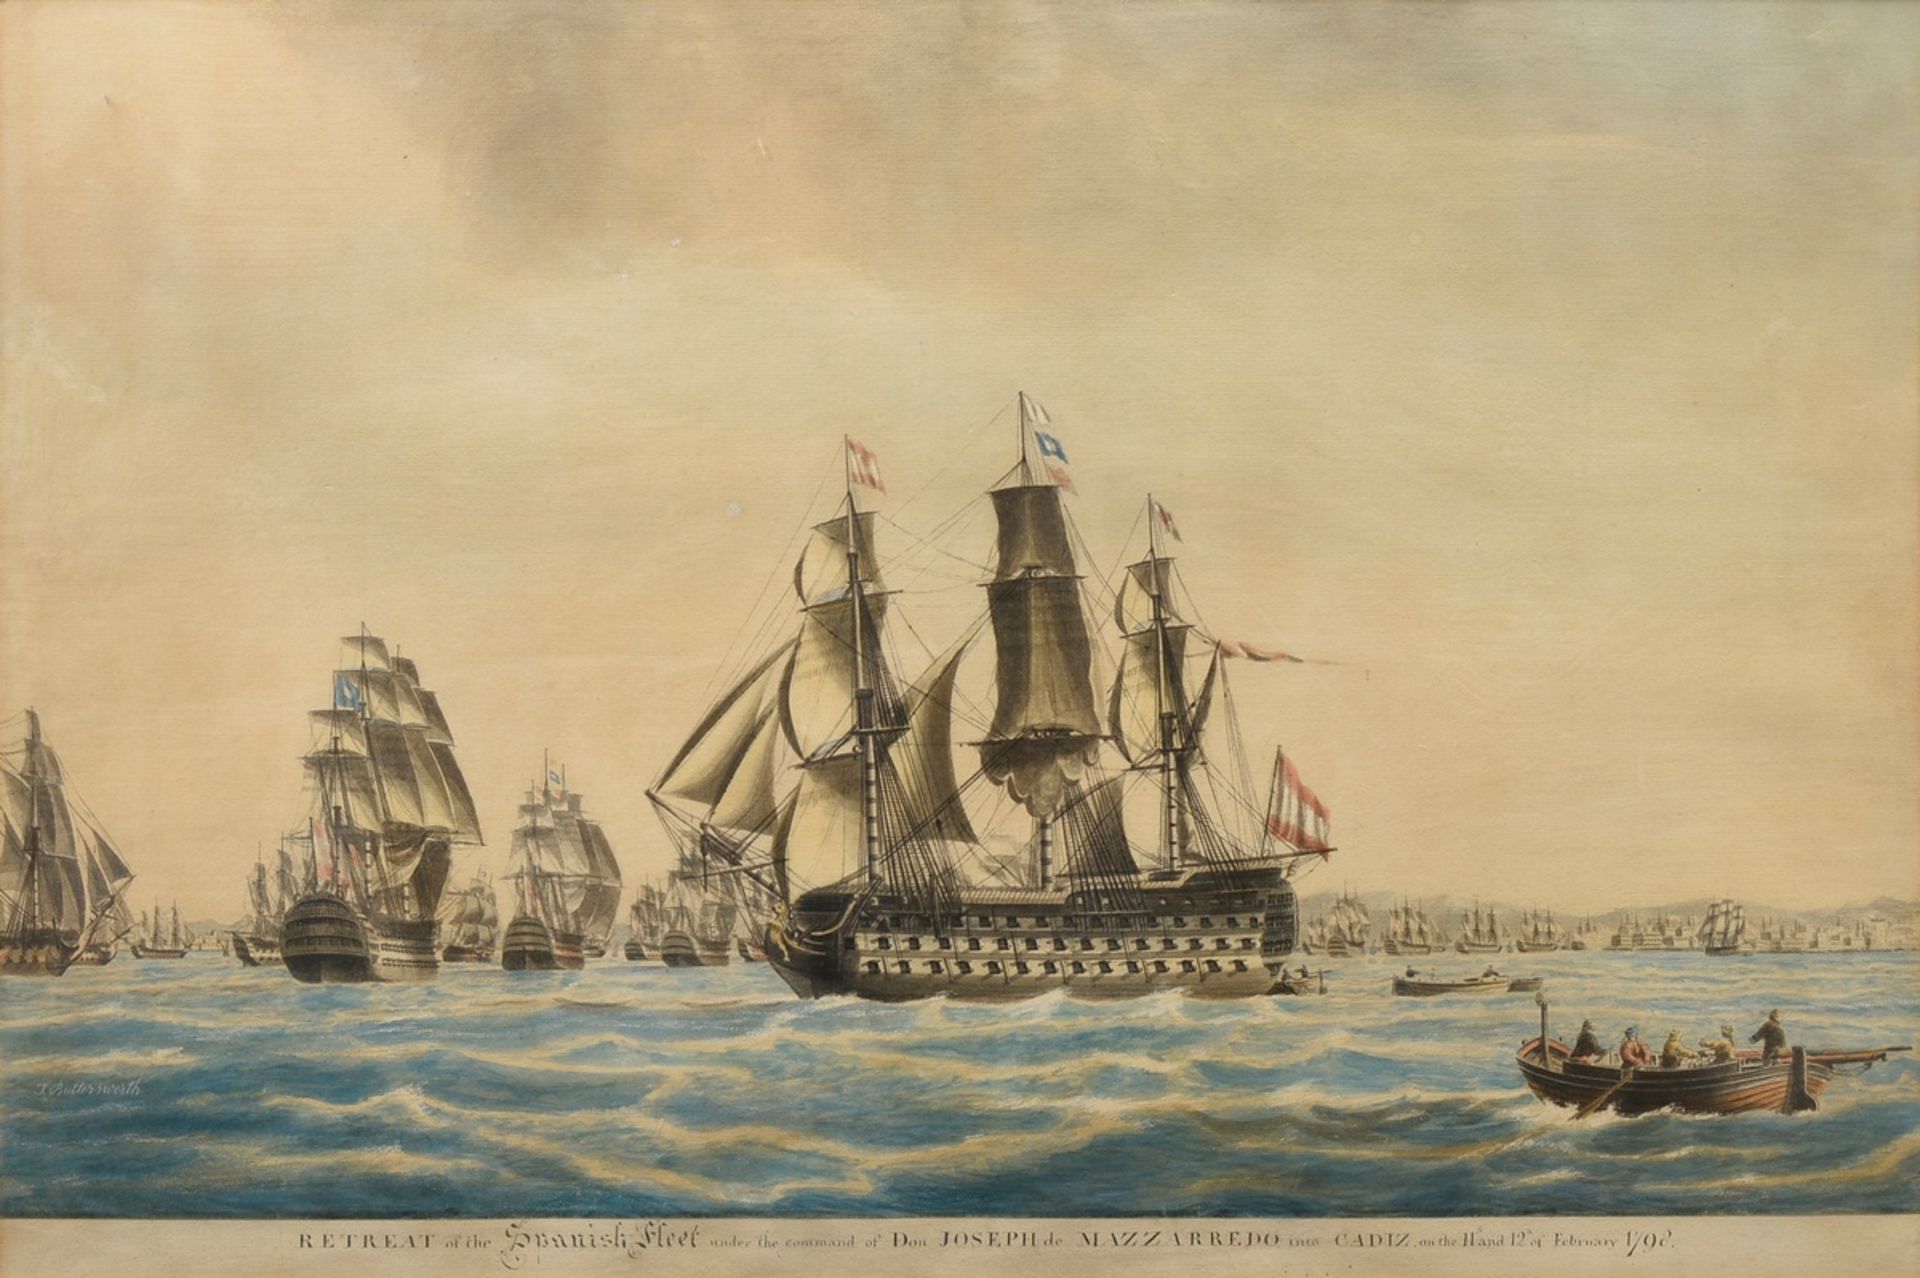 Buttersworth, Thomas (c.1768-1842) "Retreat of the Spanish Fleet under the command of Don Joseph de